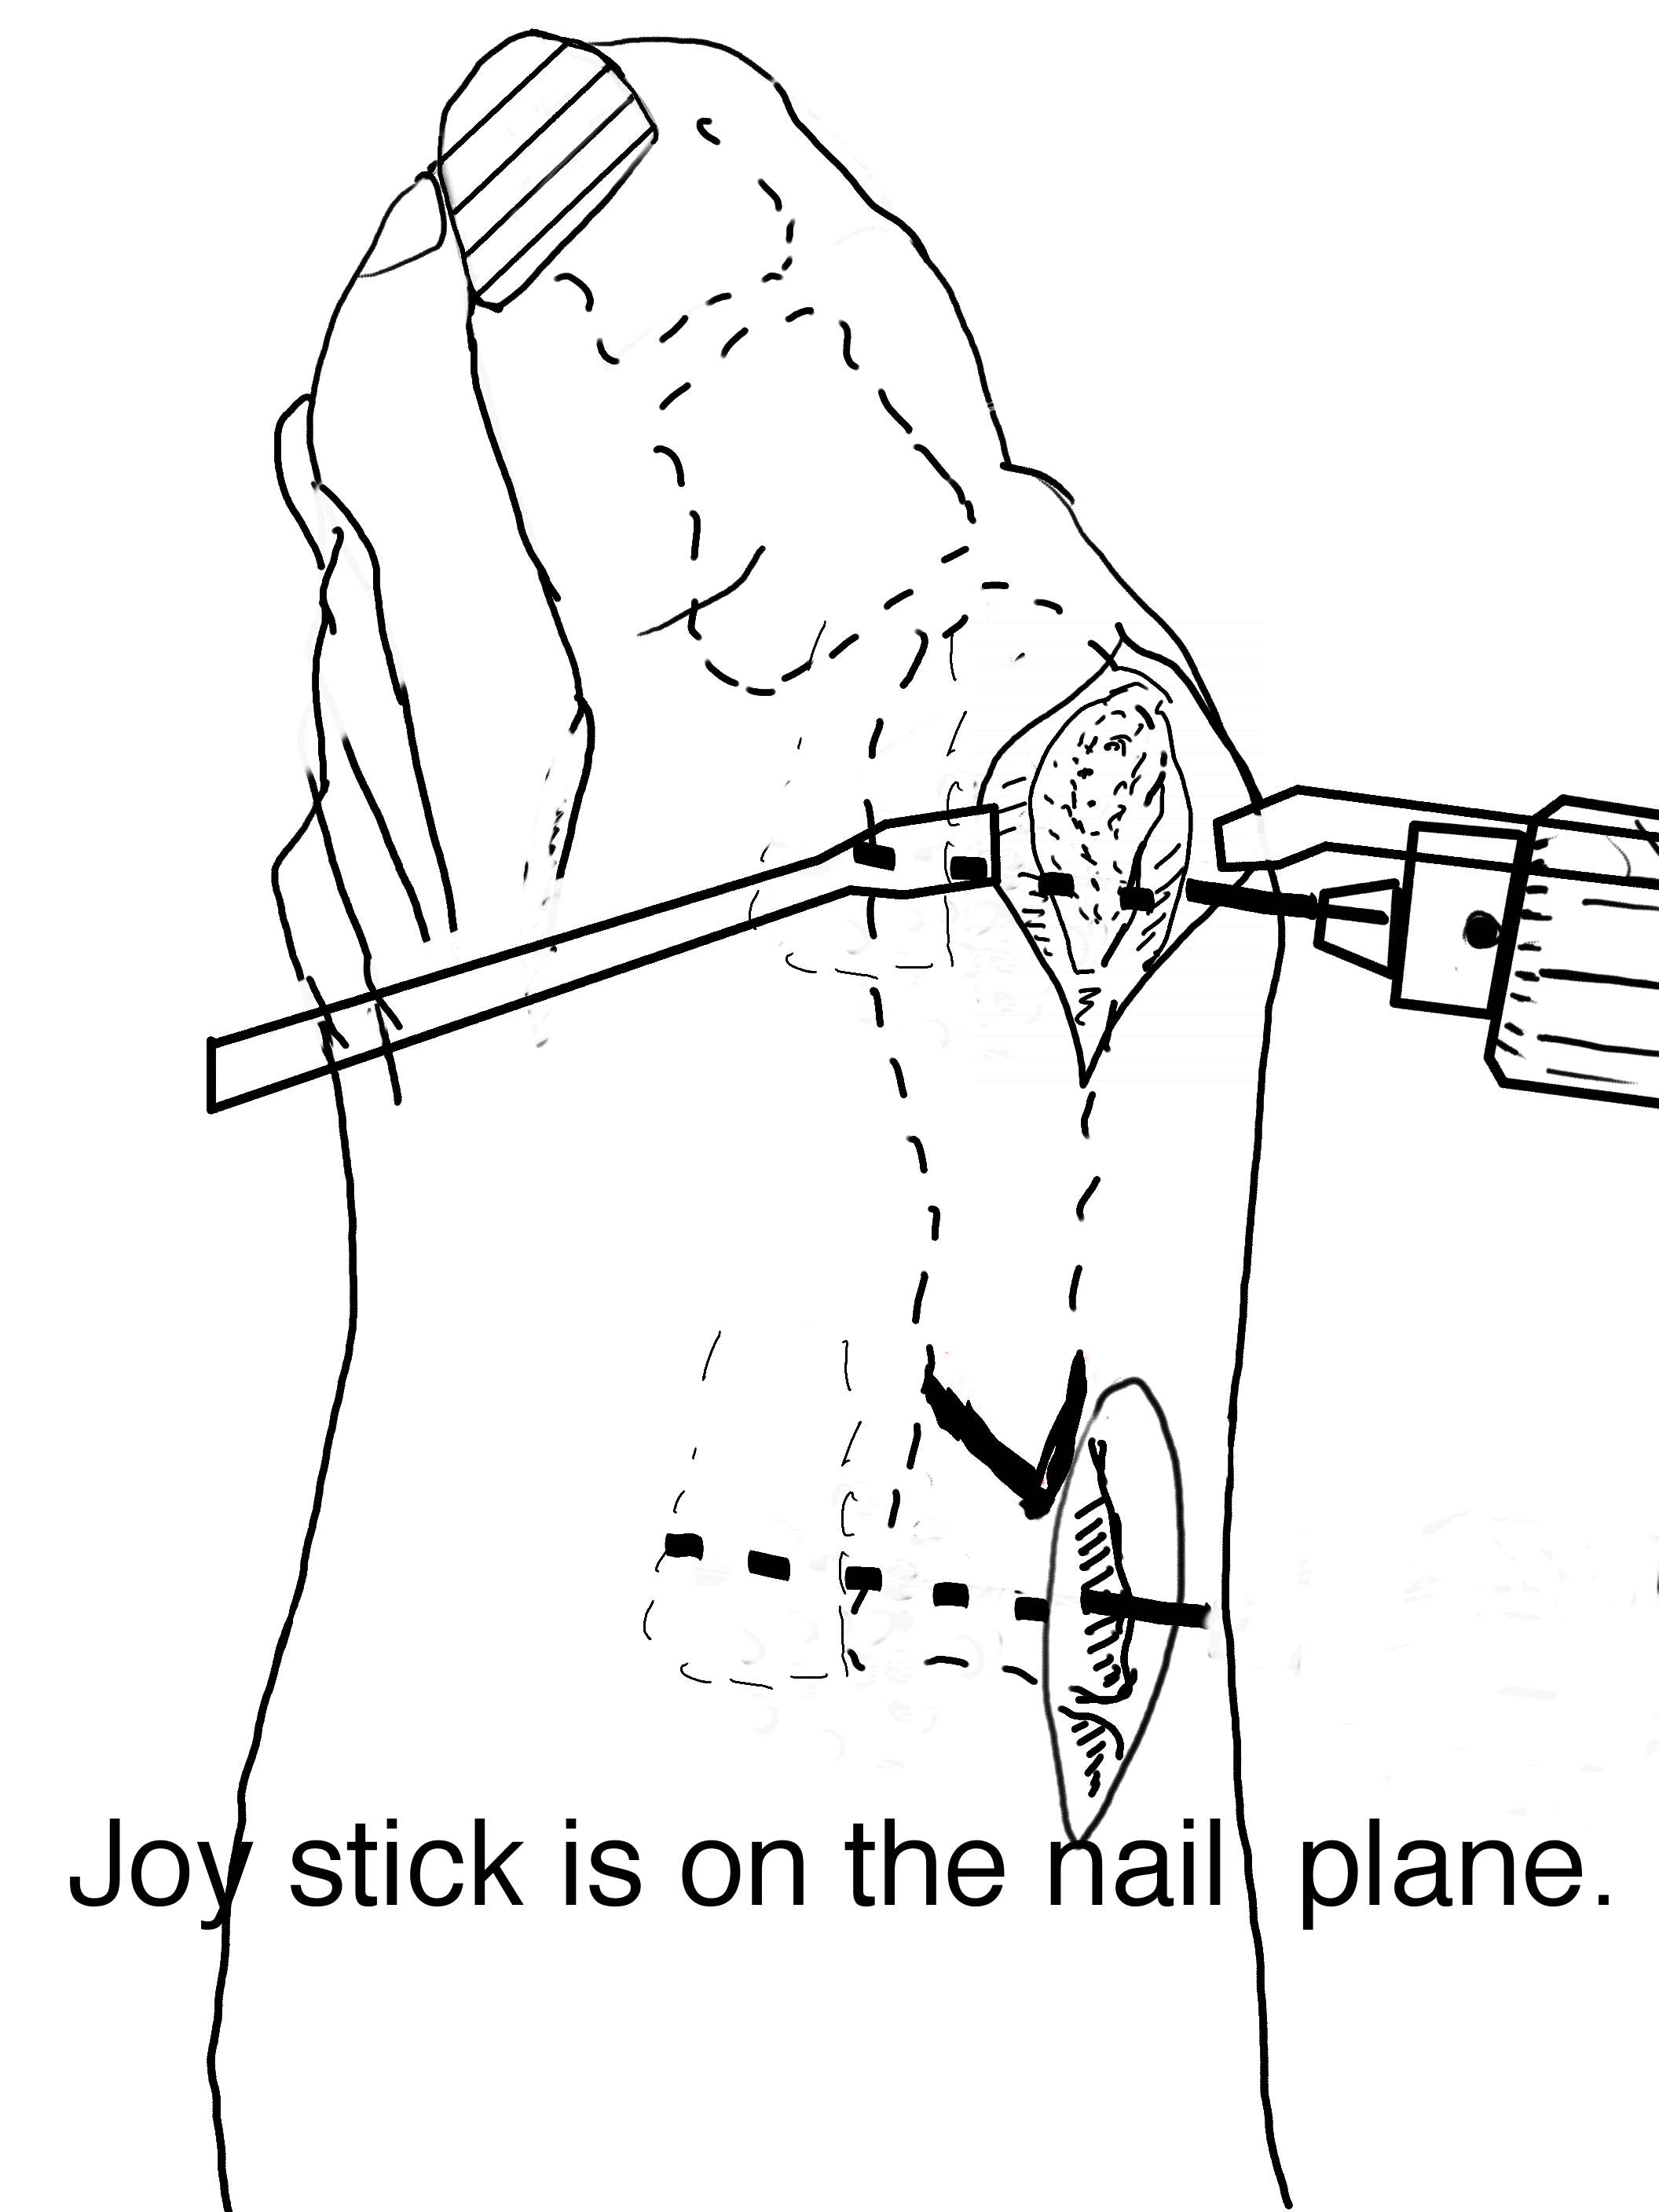 joy_stick_drilling.jpg